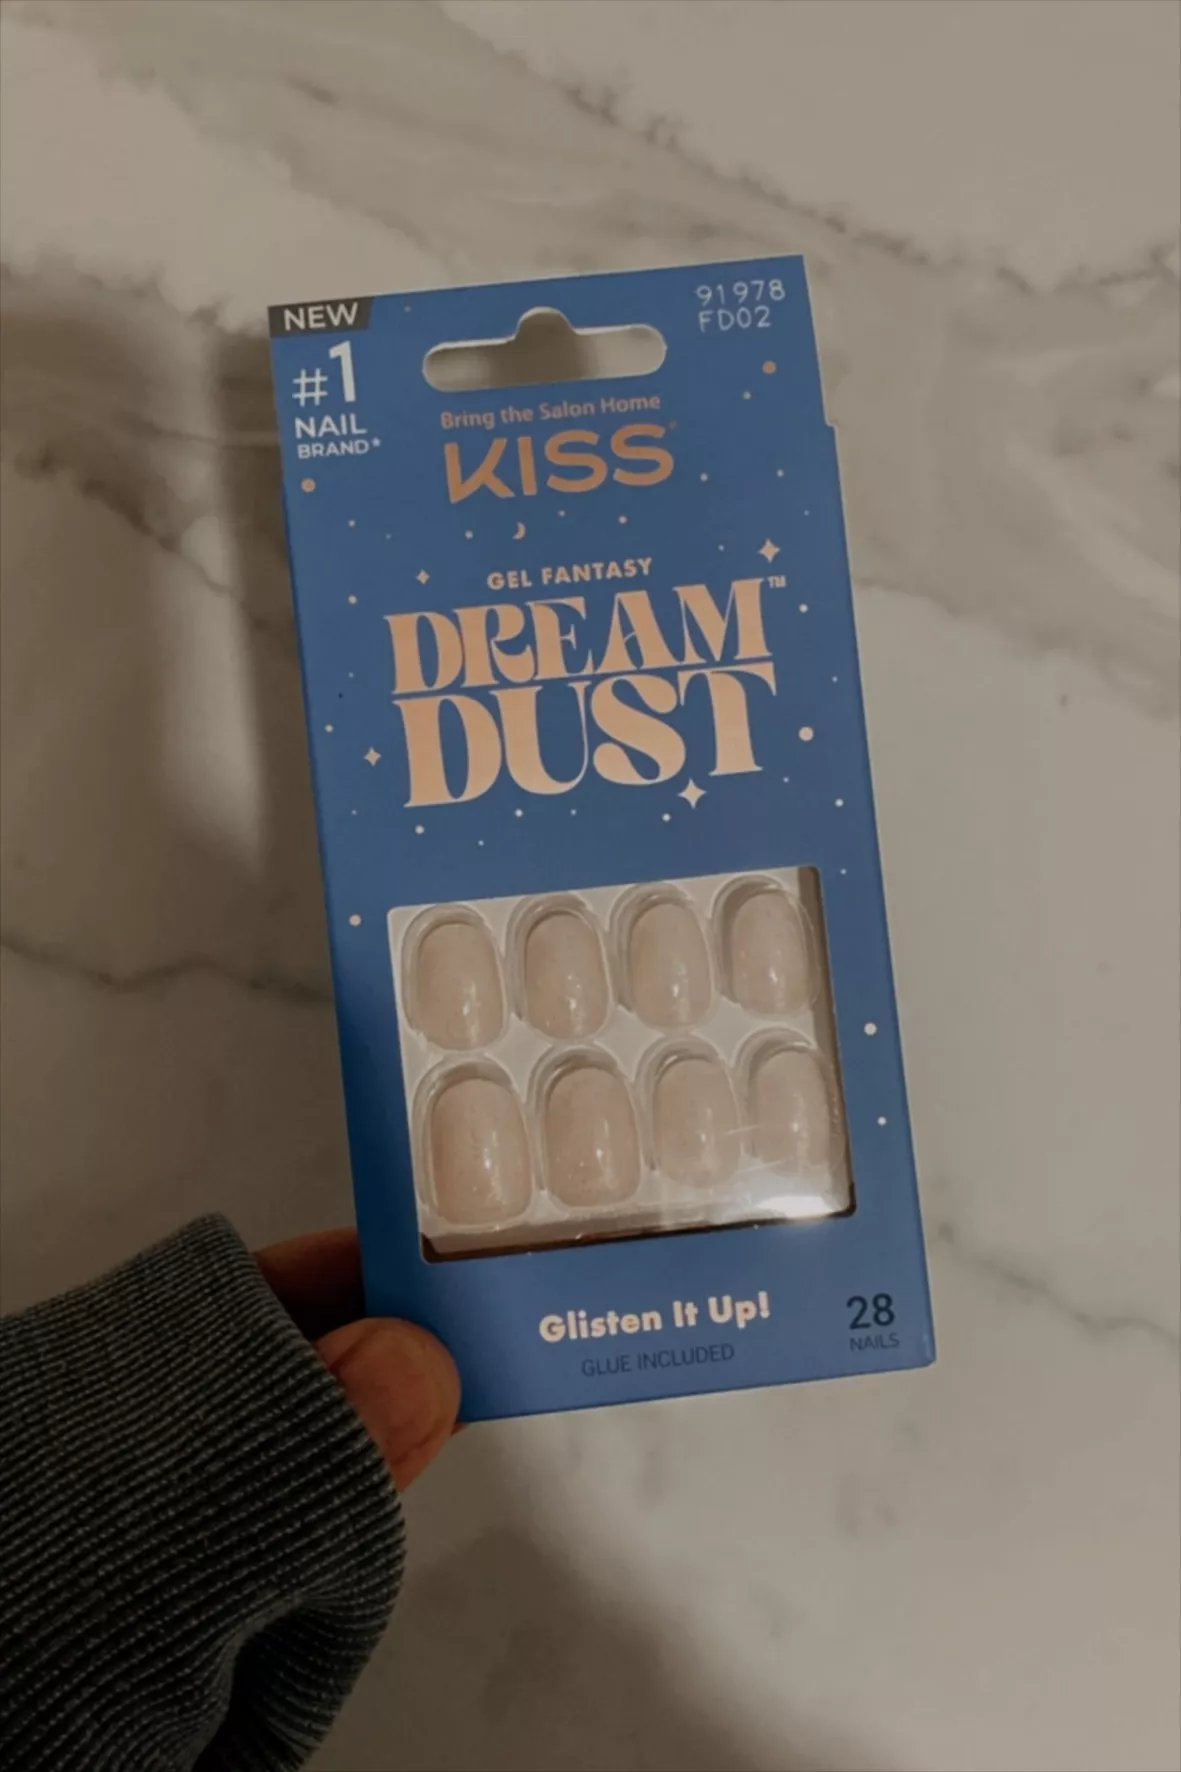 Mood Dust Gel Fantasy Dreamdust Nails - Kiss